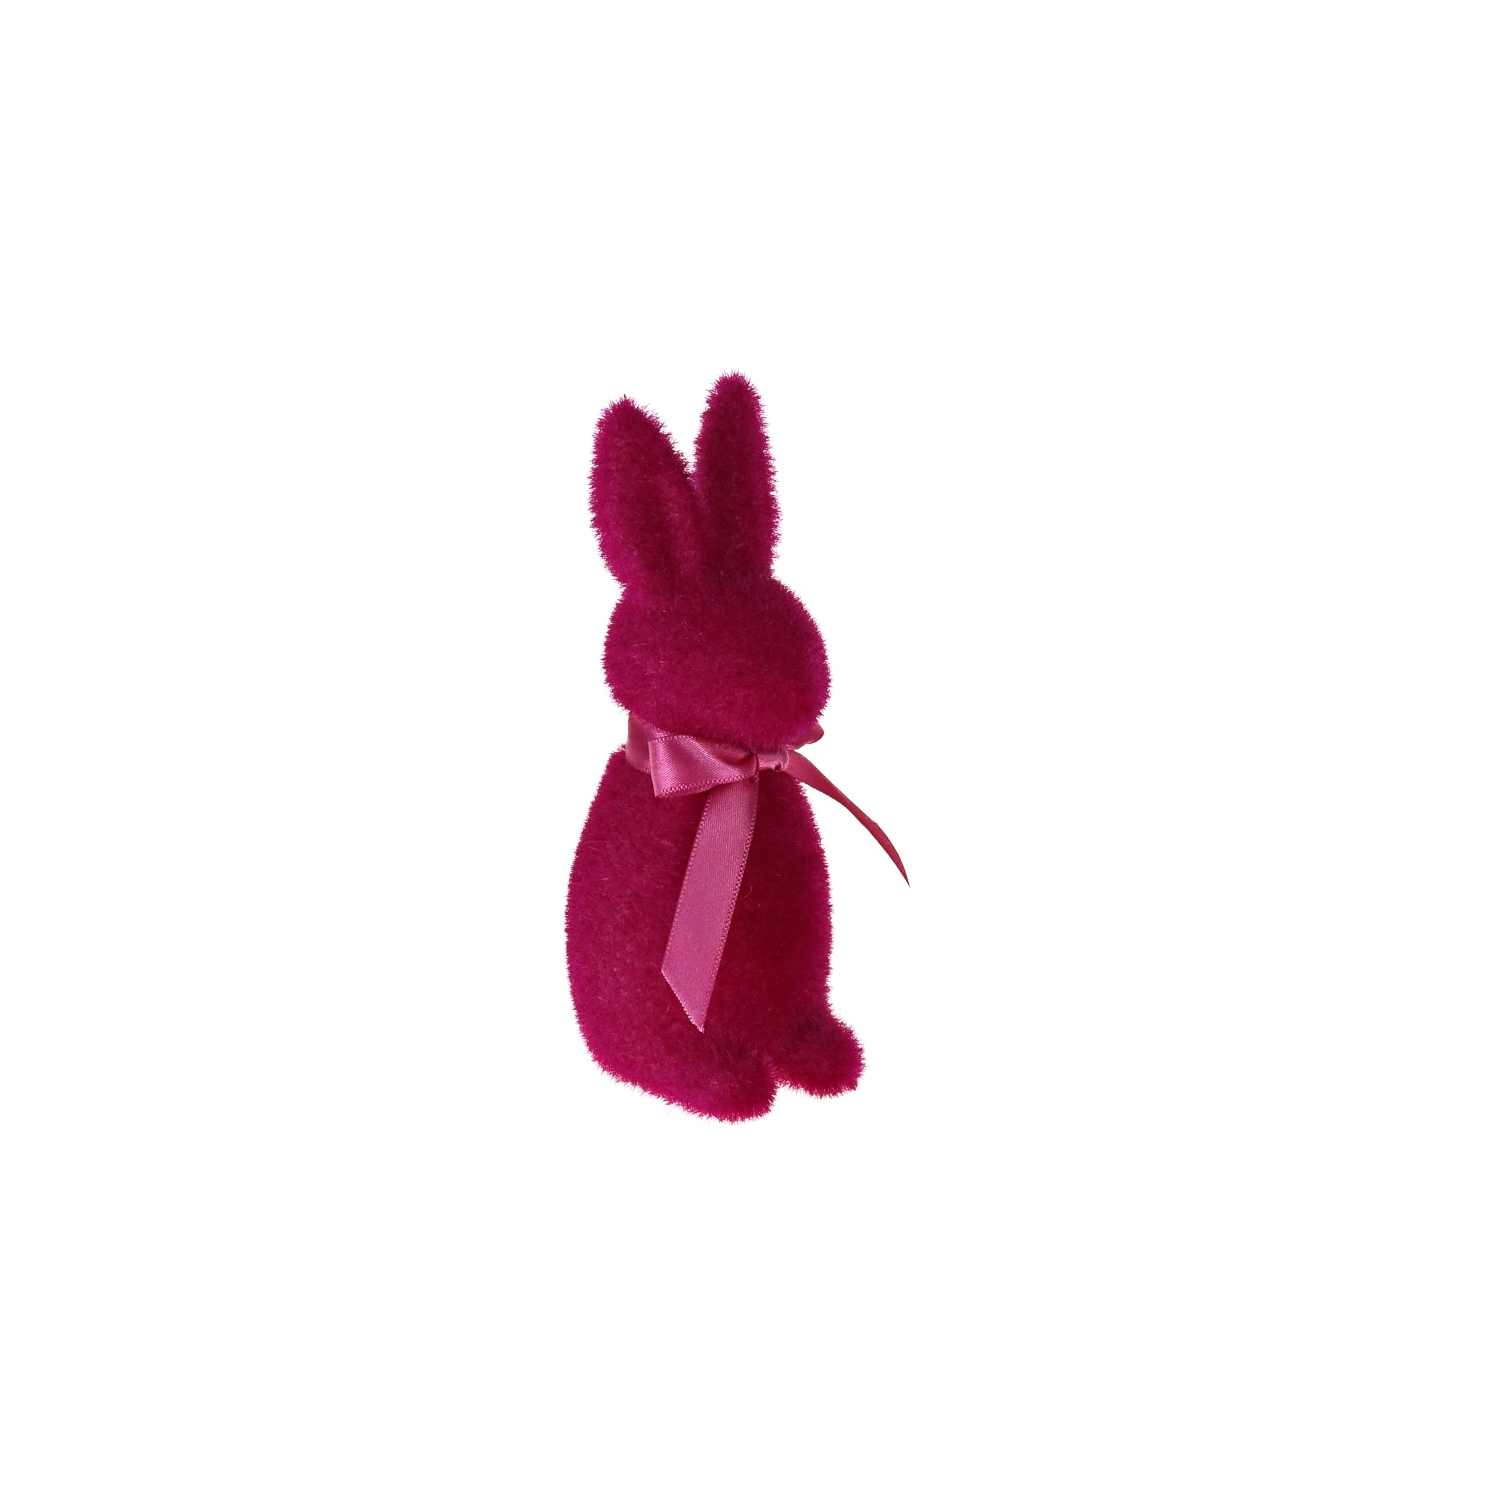 Werner Voss Bright Magenta Flocked Rabbit With Bow 